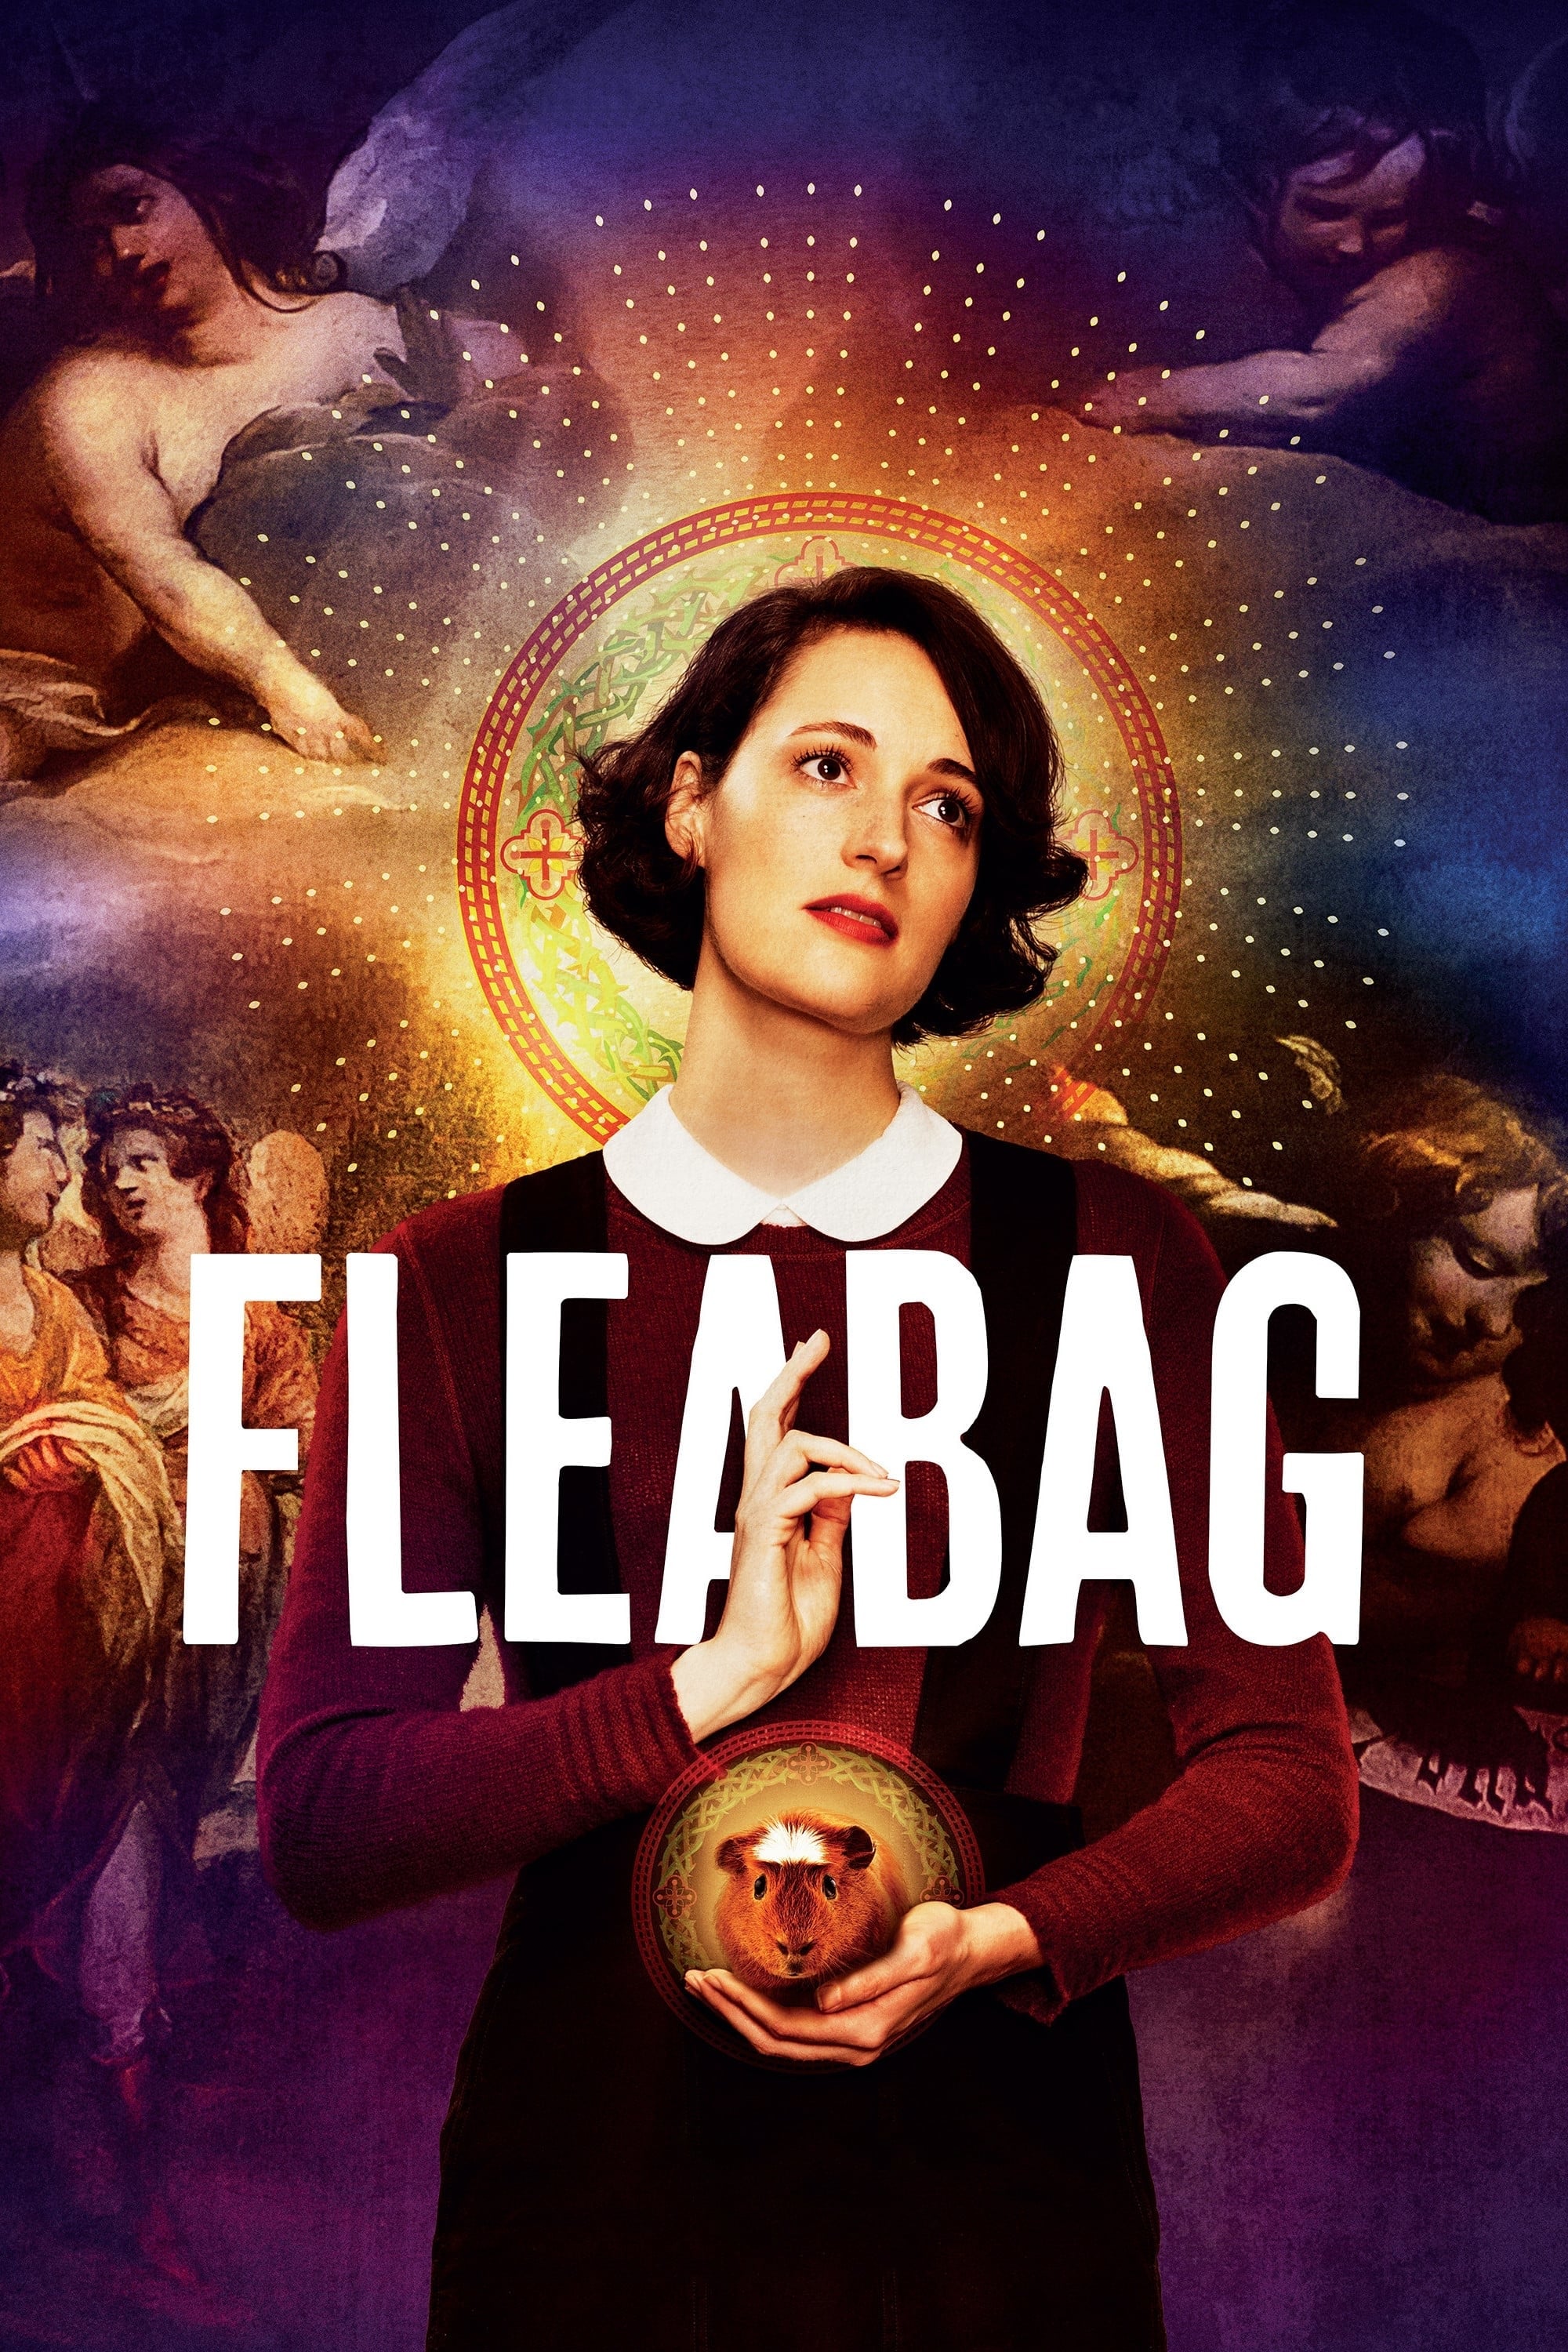 Fleabag TV Shows About Sister Sister Relationship